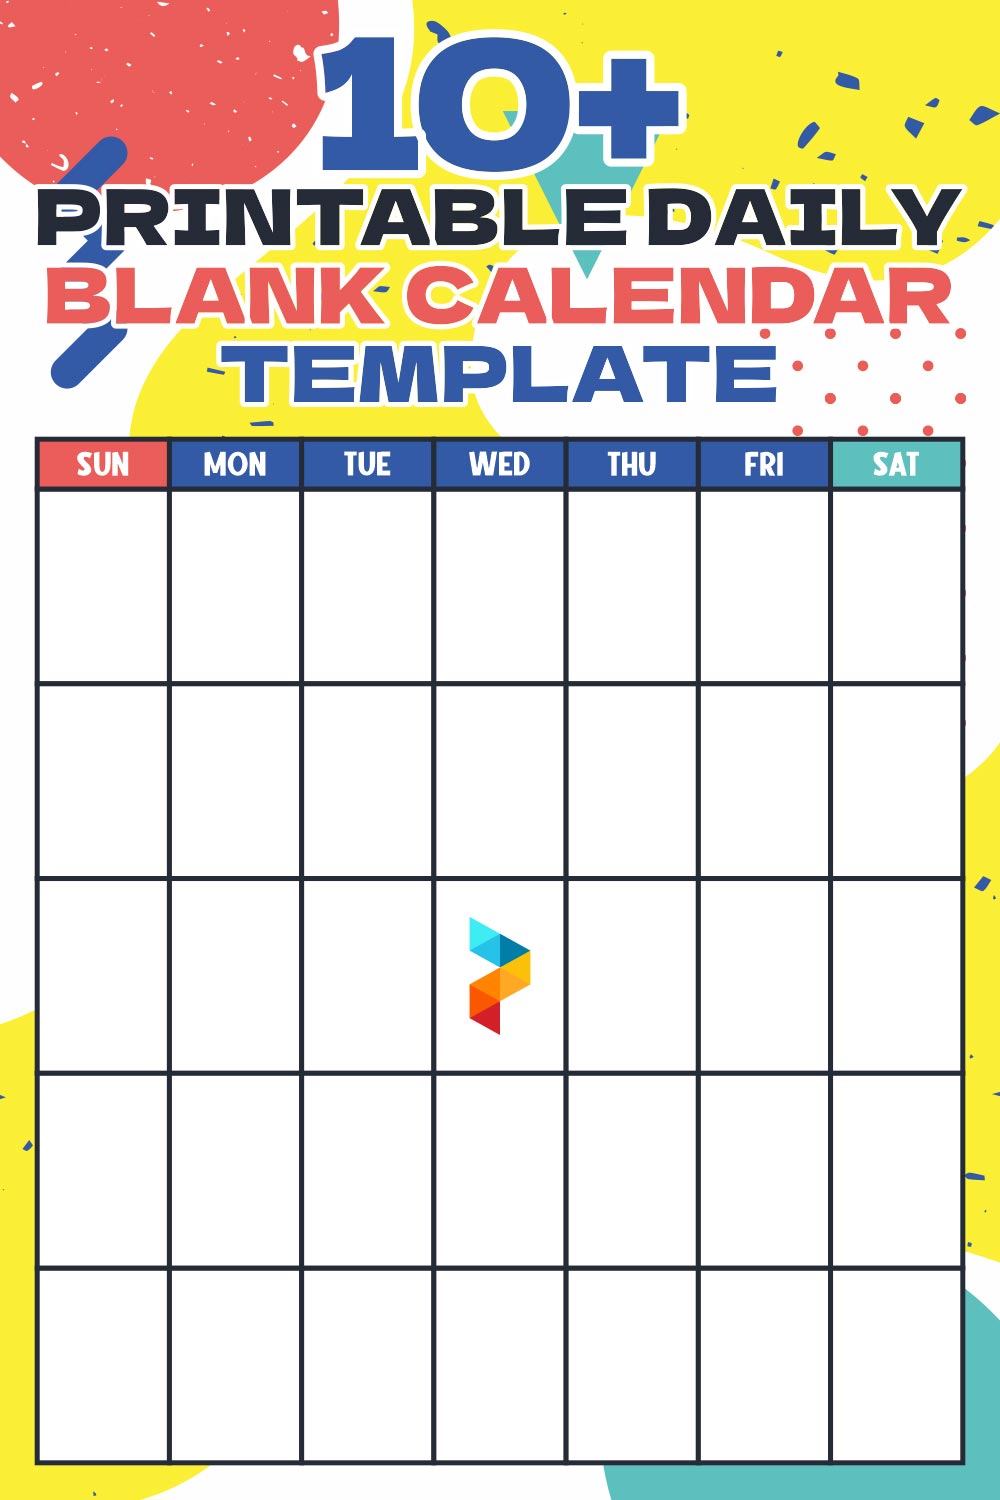 Printable Daily Blank Calendar Template